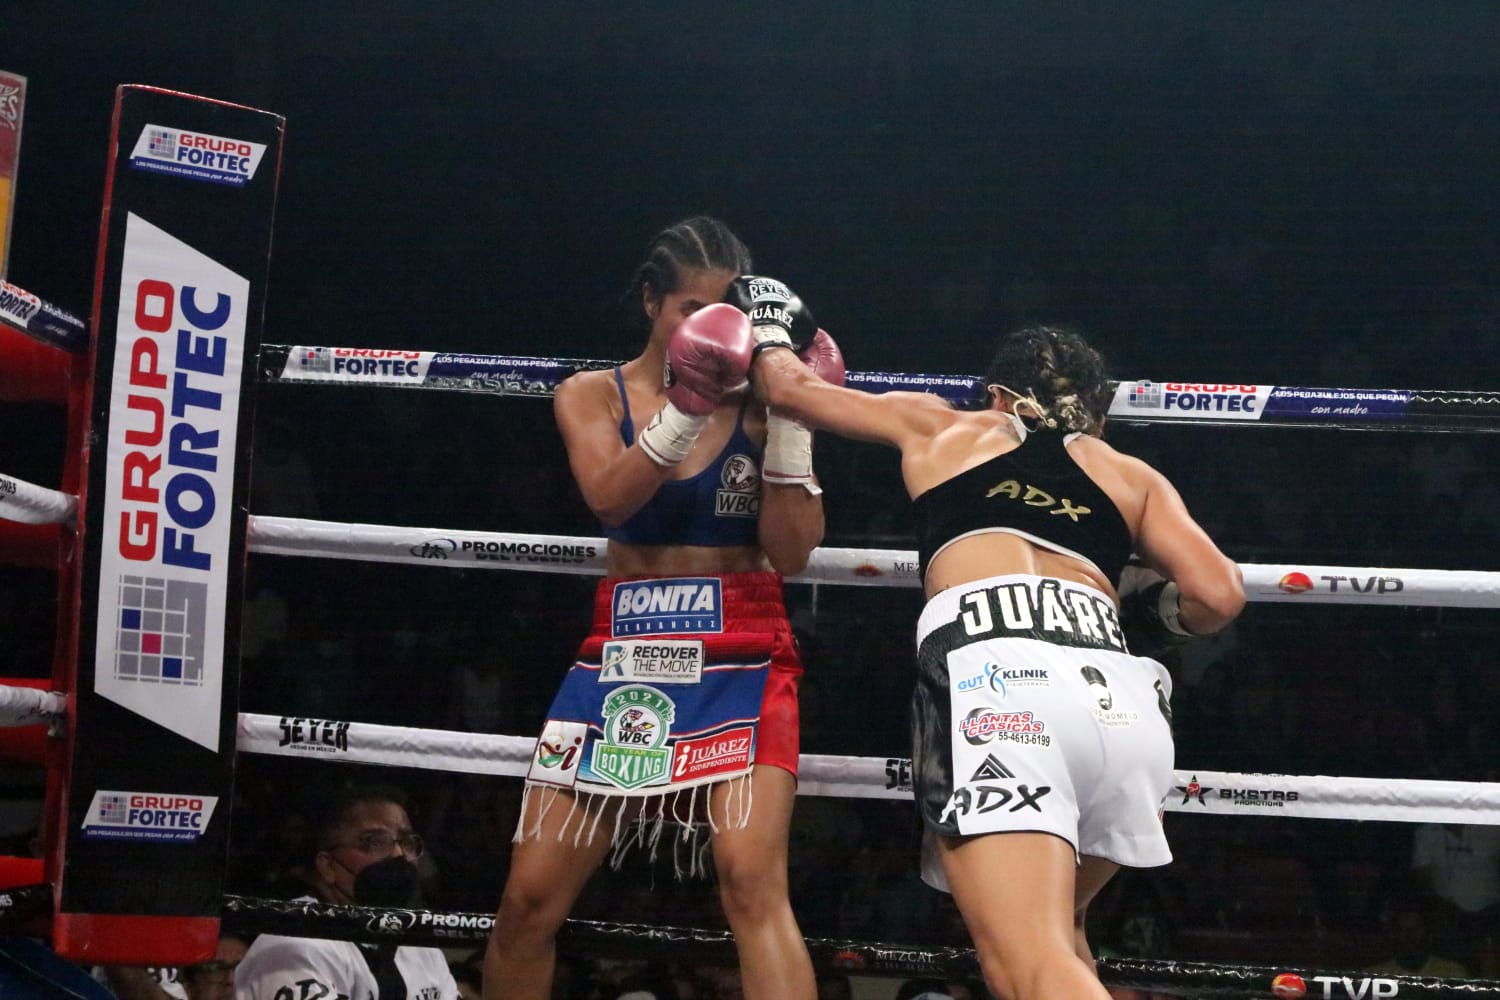 Lourdes “Lulu” Juarez defeats Diana “La Bonita” Fernandez | Boxen247.com (Kristian von Sponneck)